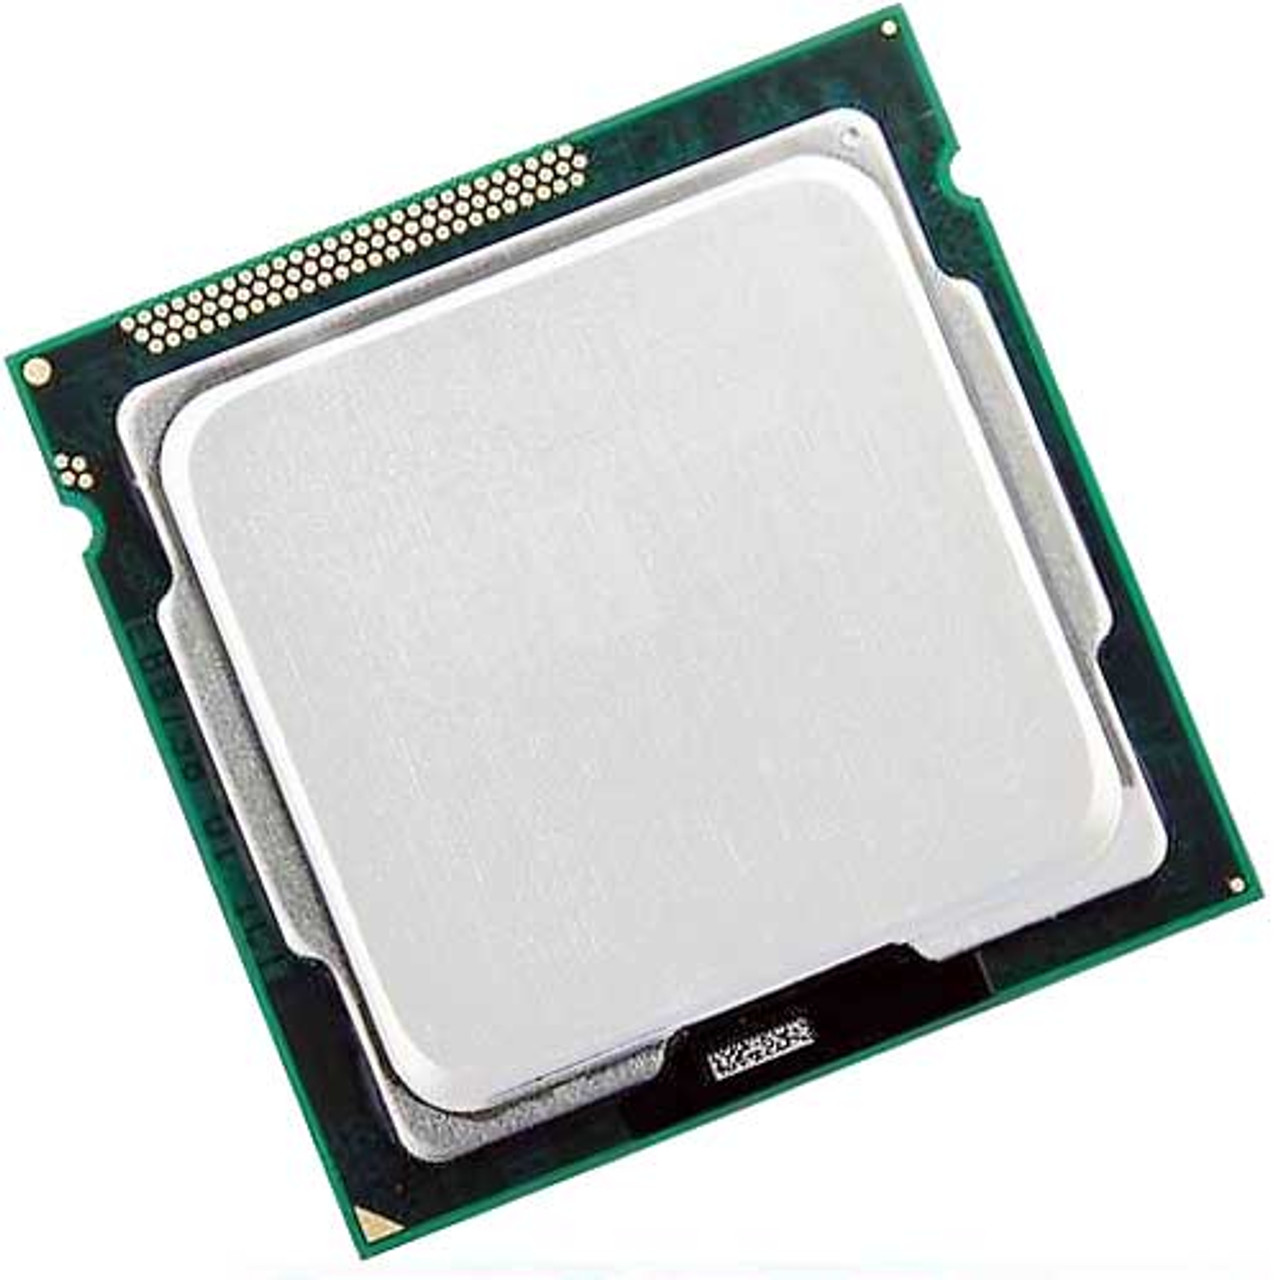 Intel Celeron D 336 2.80GHz Processor BX80547RE2800CN UPC 735858176354 - INTEL